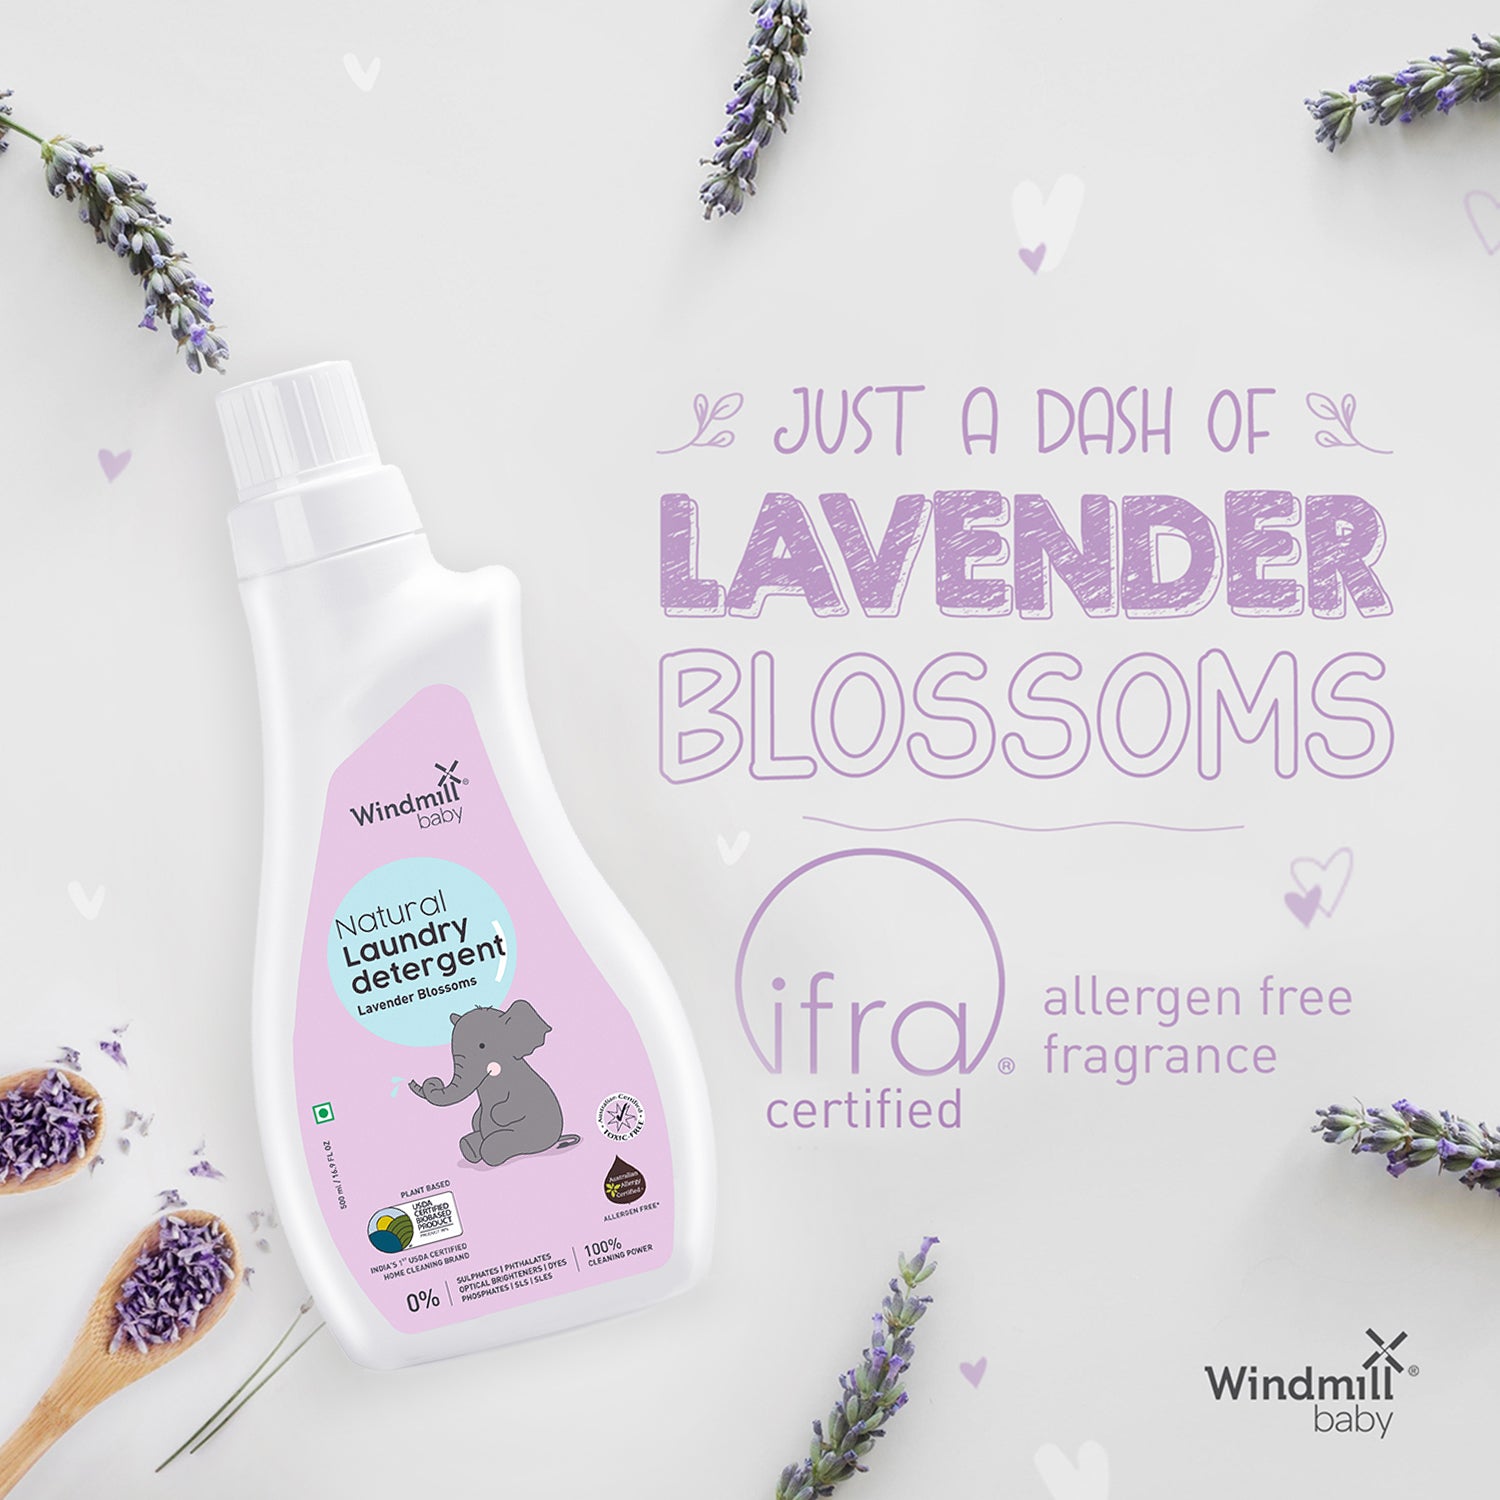 Natural Laundry Detergent Lavender Blossoms 500ml